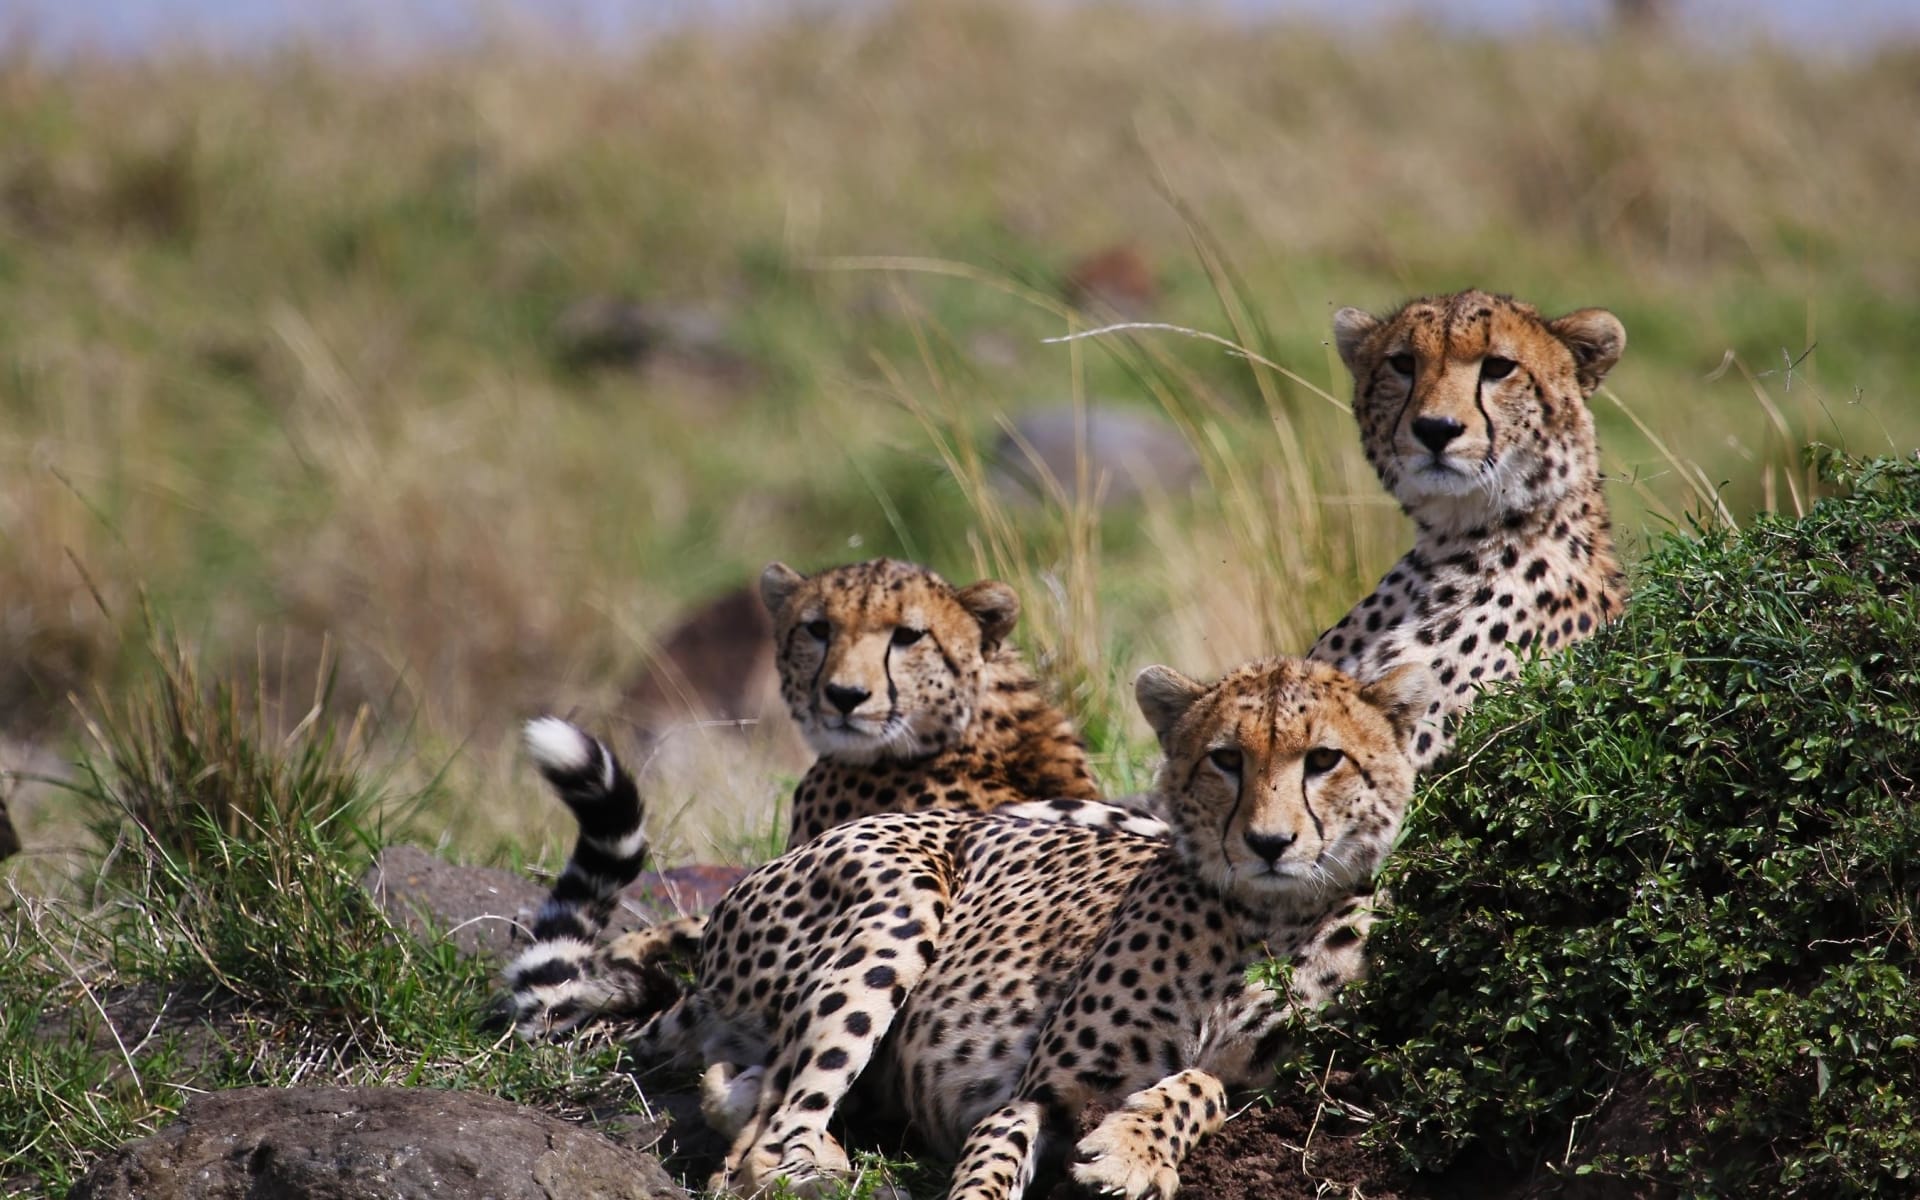 Kenya_Cheetah_fn1dlw.jpg